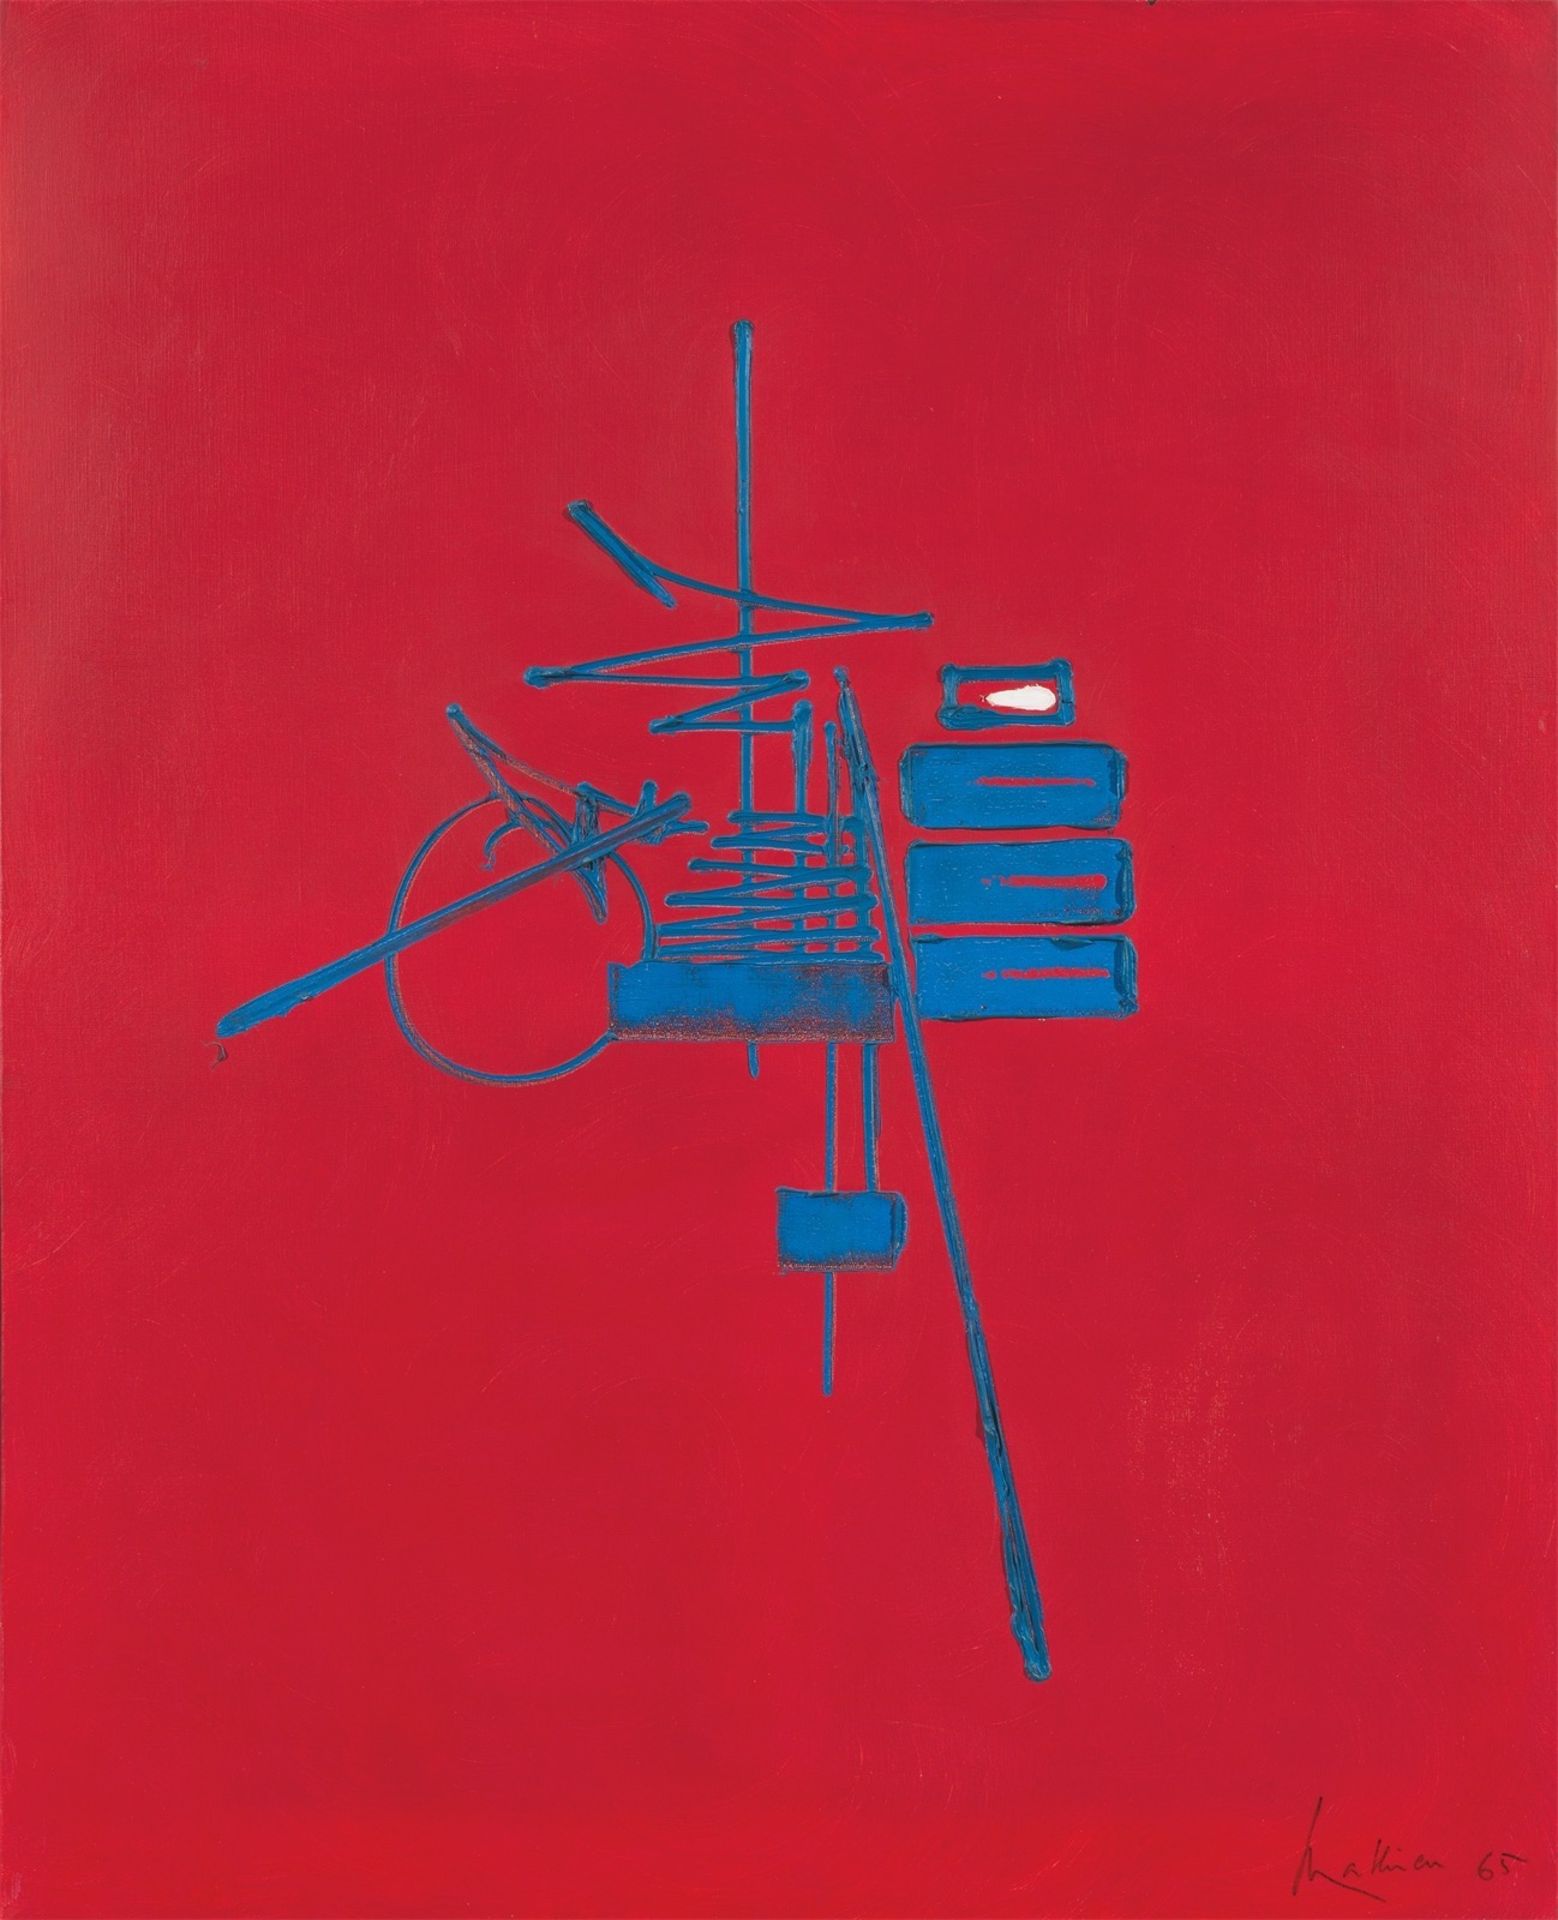 Georges Mathieu. ”Fzey”. 1965